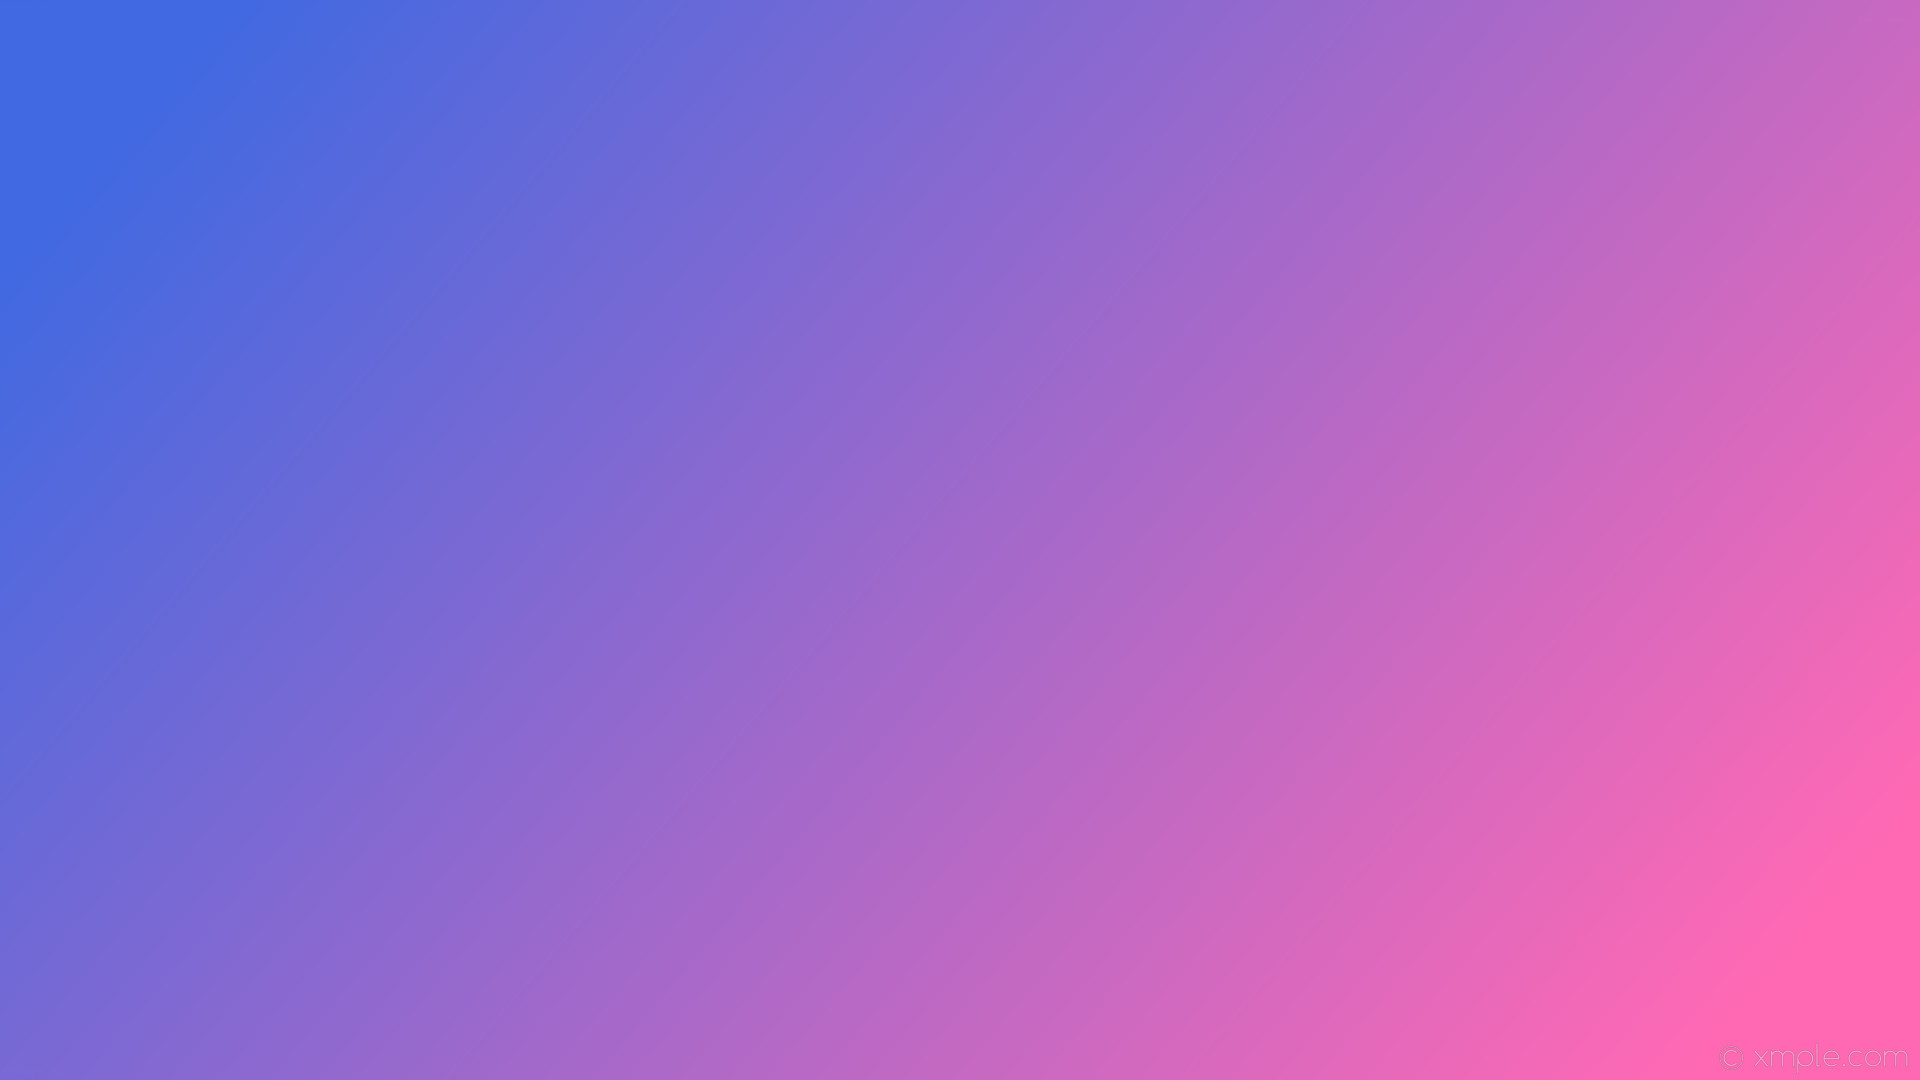 1920x1080 wallpaper pink gradient blue linear hot pink royal blue #ff69b4 #4169e1 345Â°